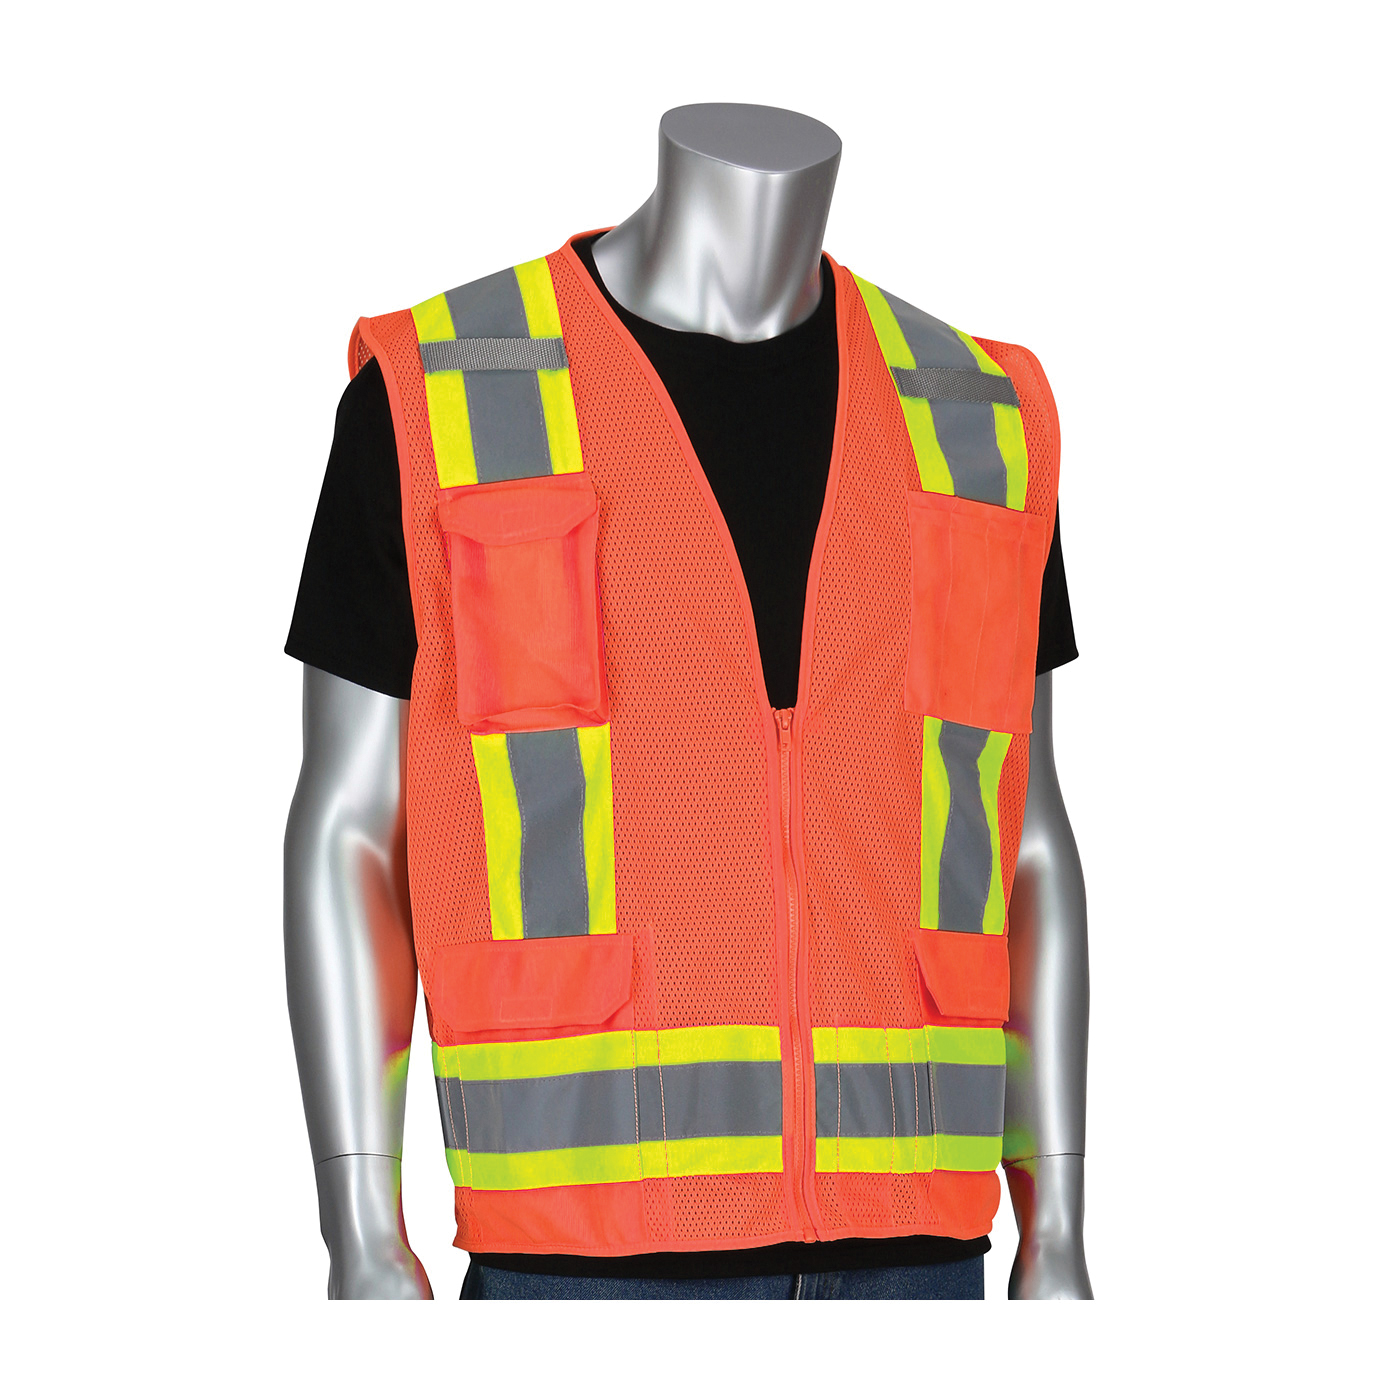 PIP® 302-0500M-OR/XL 2-Tone Surveyor Safety Vest, XL, Hi-Viz Orange, Polyester, Zipper Closure, 11 Pockets, ANSI Class: Class 2, Specifications Met: ANSI 107 Type R